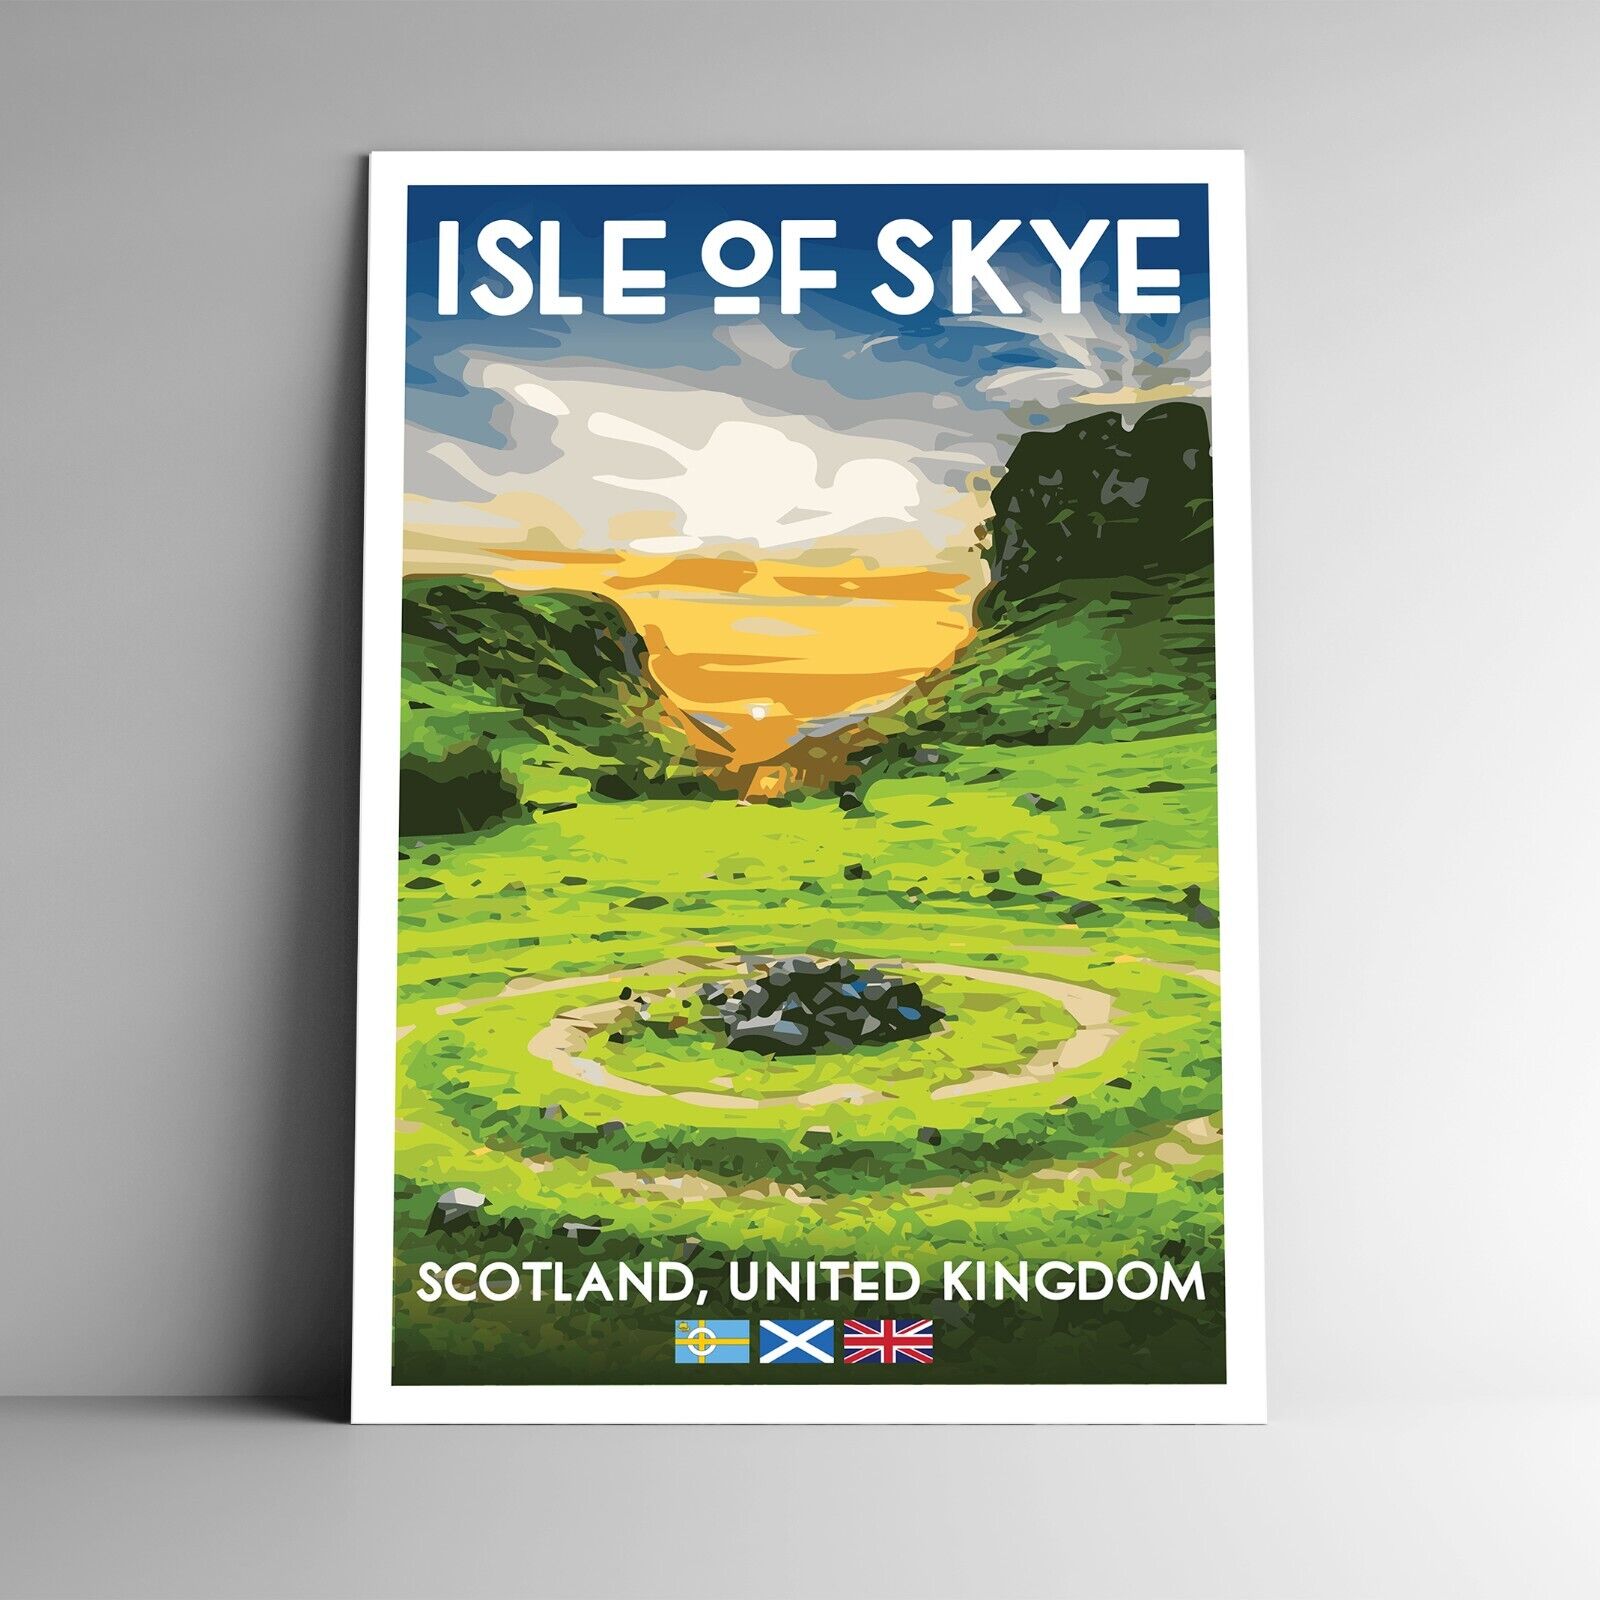 Isle of Skye Travel Poster / Postcard Scotland United Kingdom Multiple Sizes